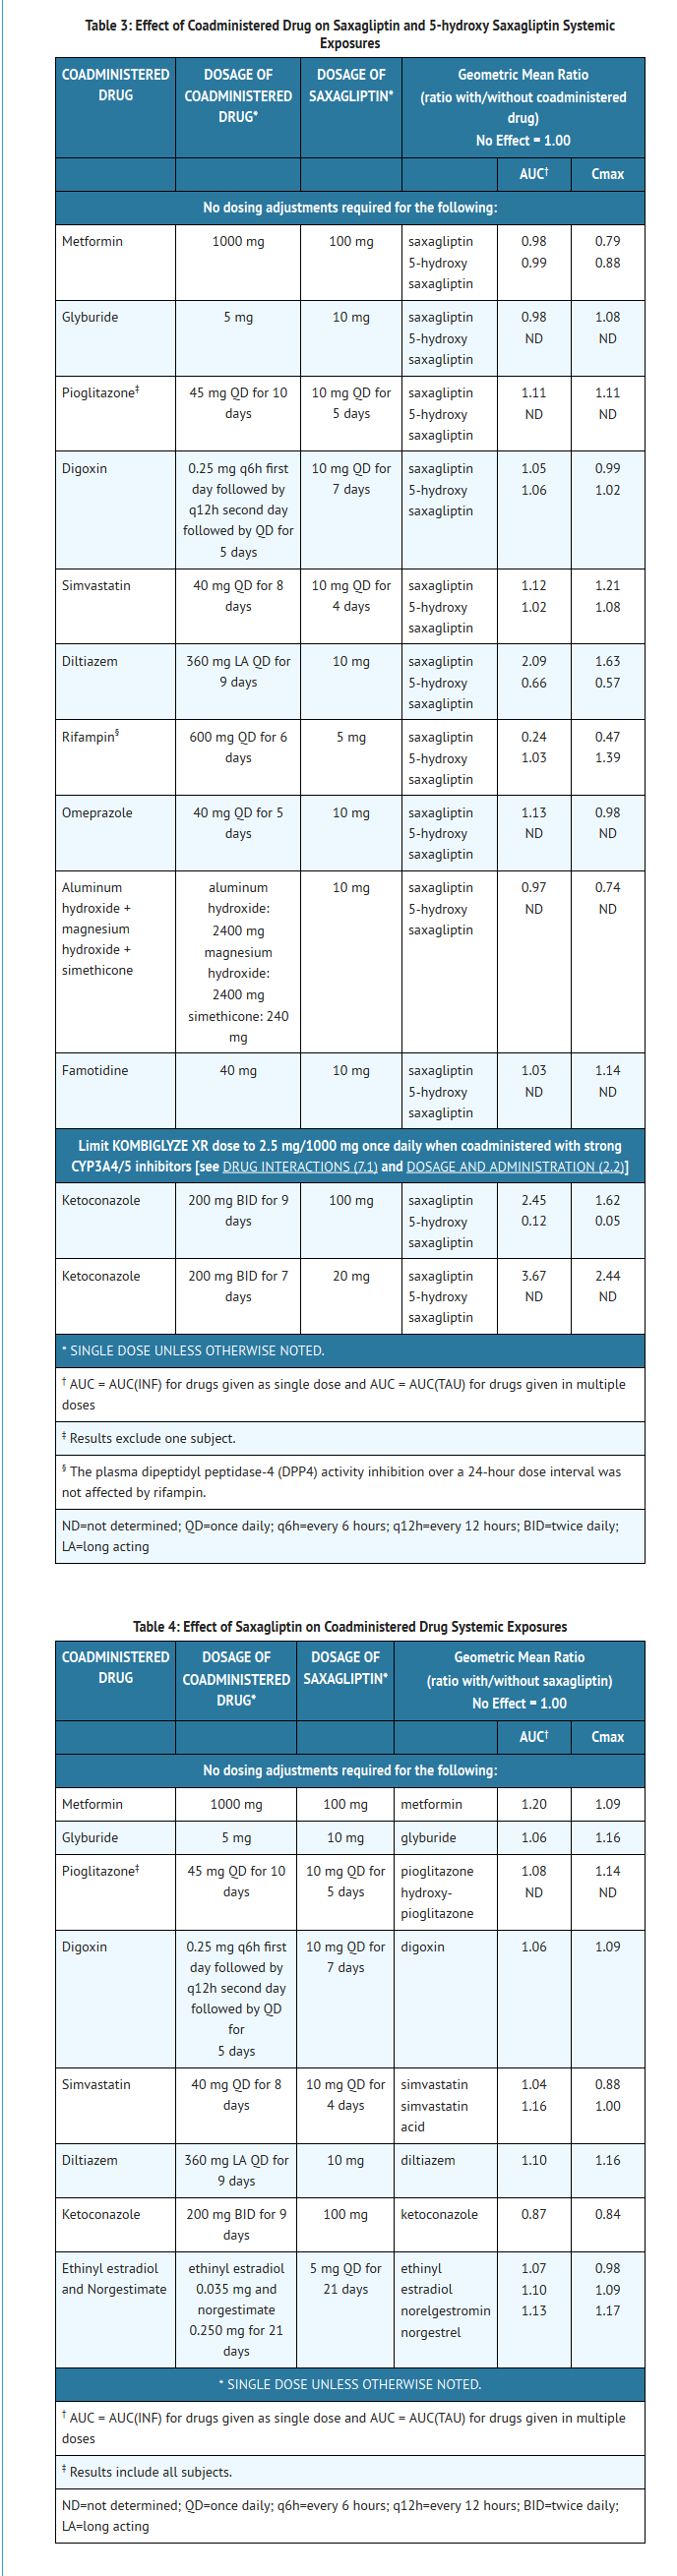 File:Saxagliptin and metformin table 3&4.png